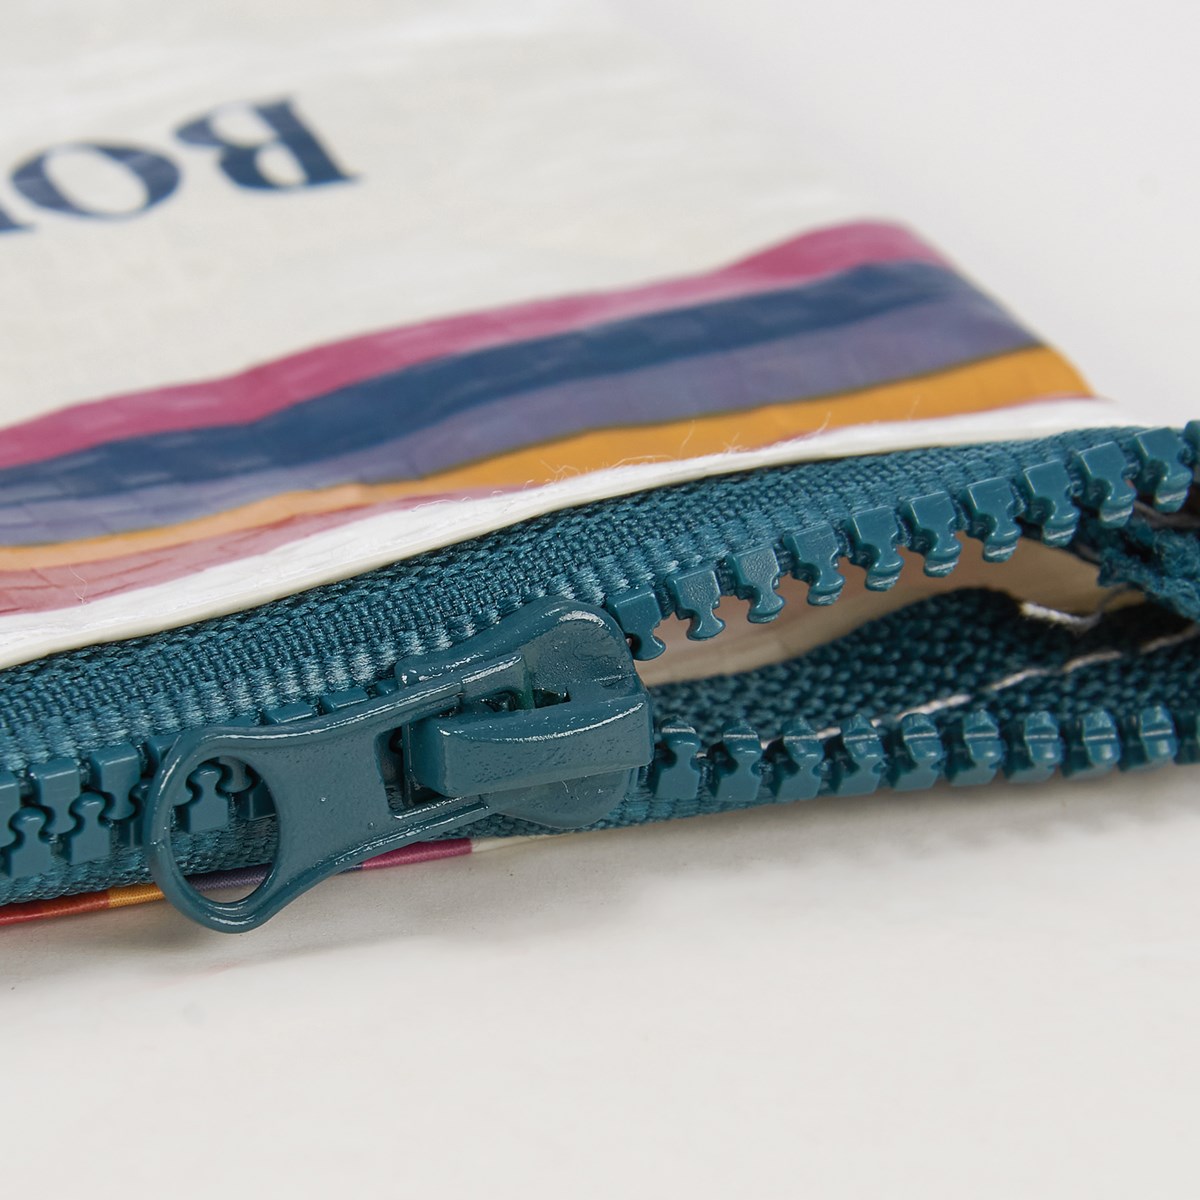 Zipper Wallet - Born To Shine - 5.25" x 4.25" - Post-Consumer Material, Plastic, Metal